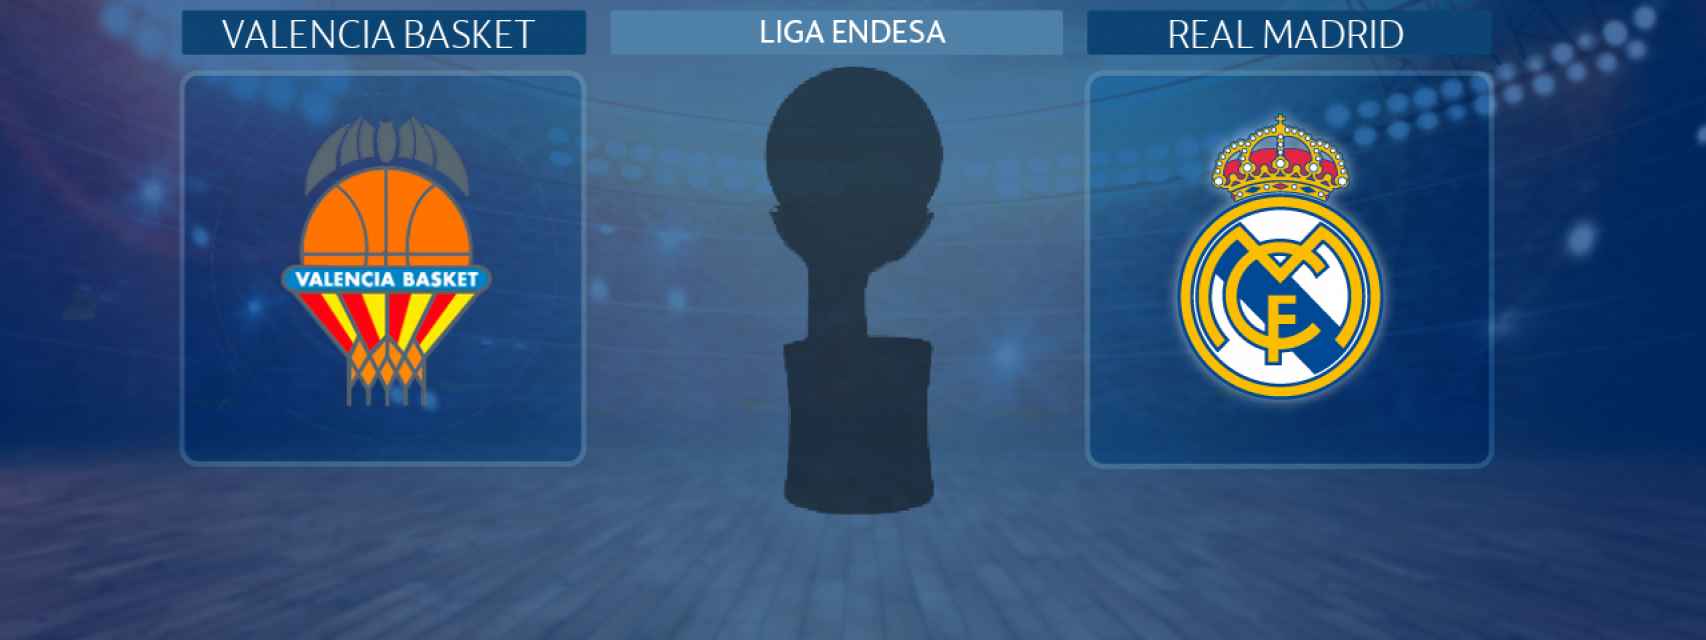 Valencia Basket - Real Madrid, semifinal de la Liga Endesa